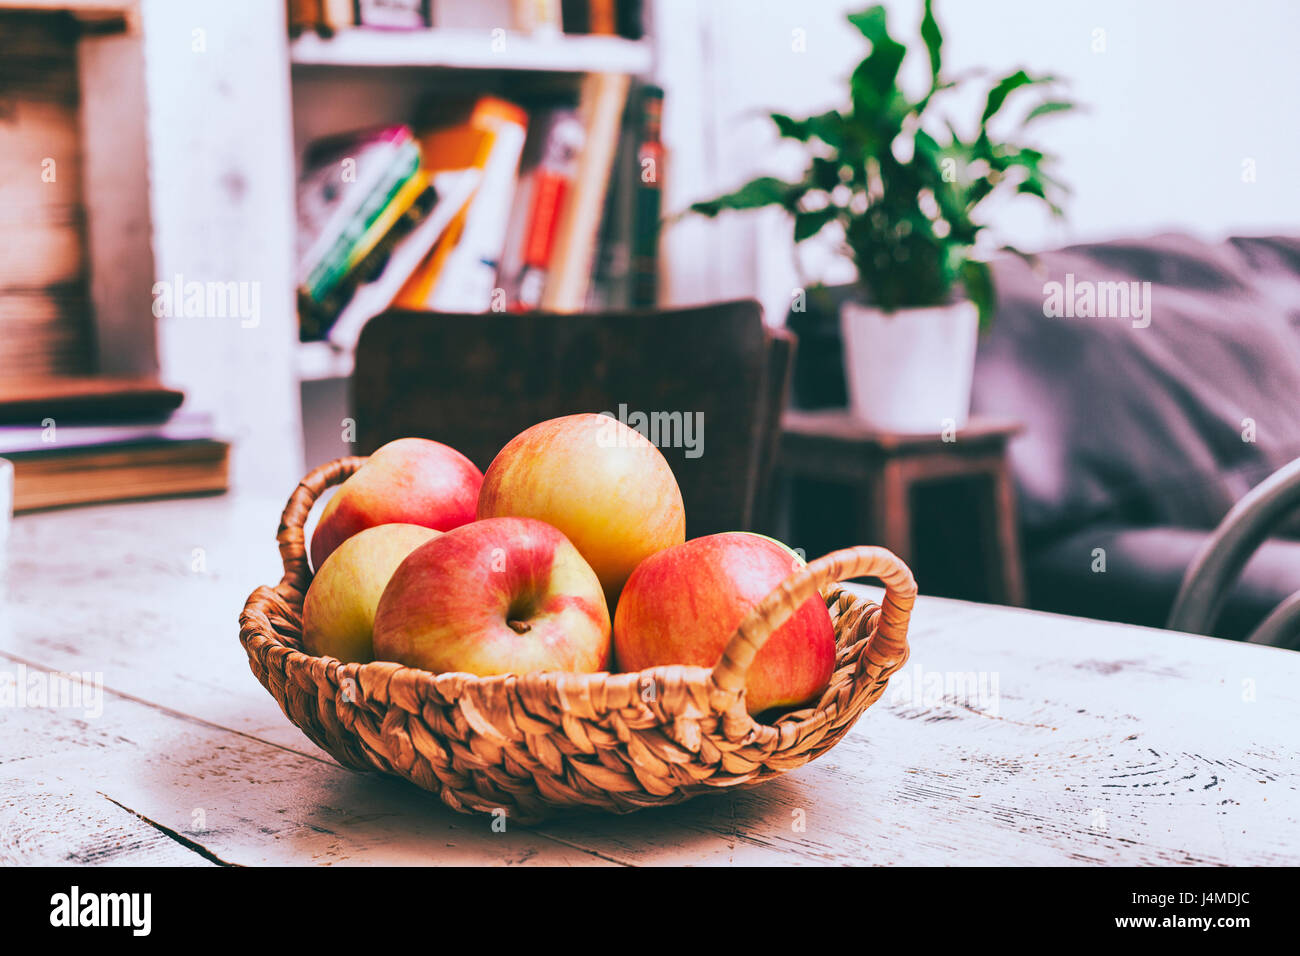 Basket of apples on wooden table in livingroom Stock Photo